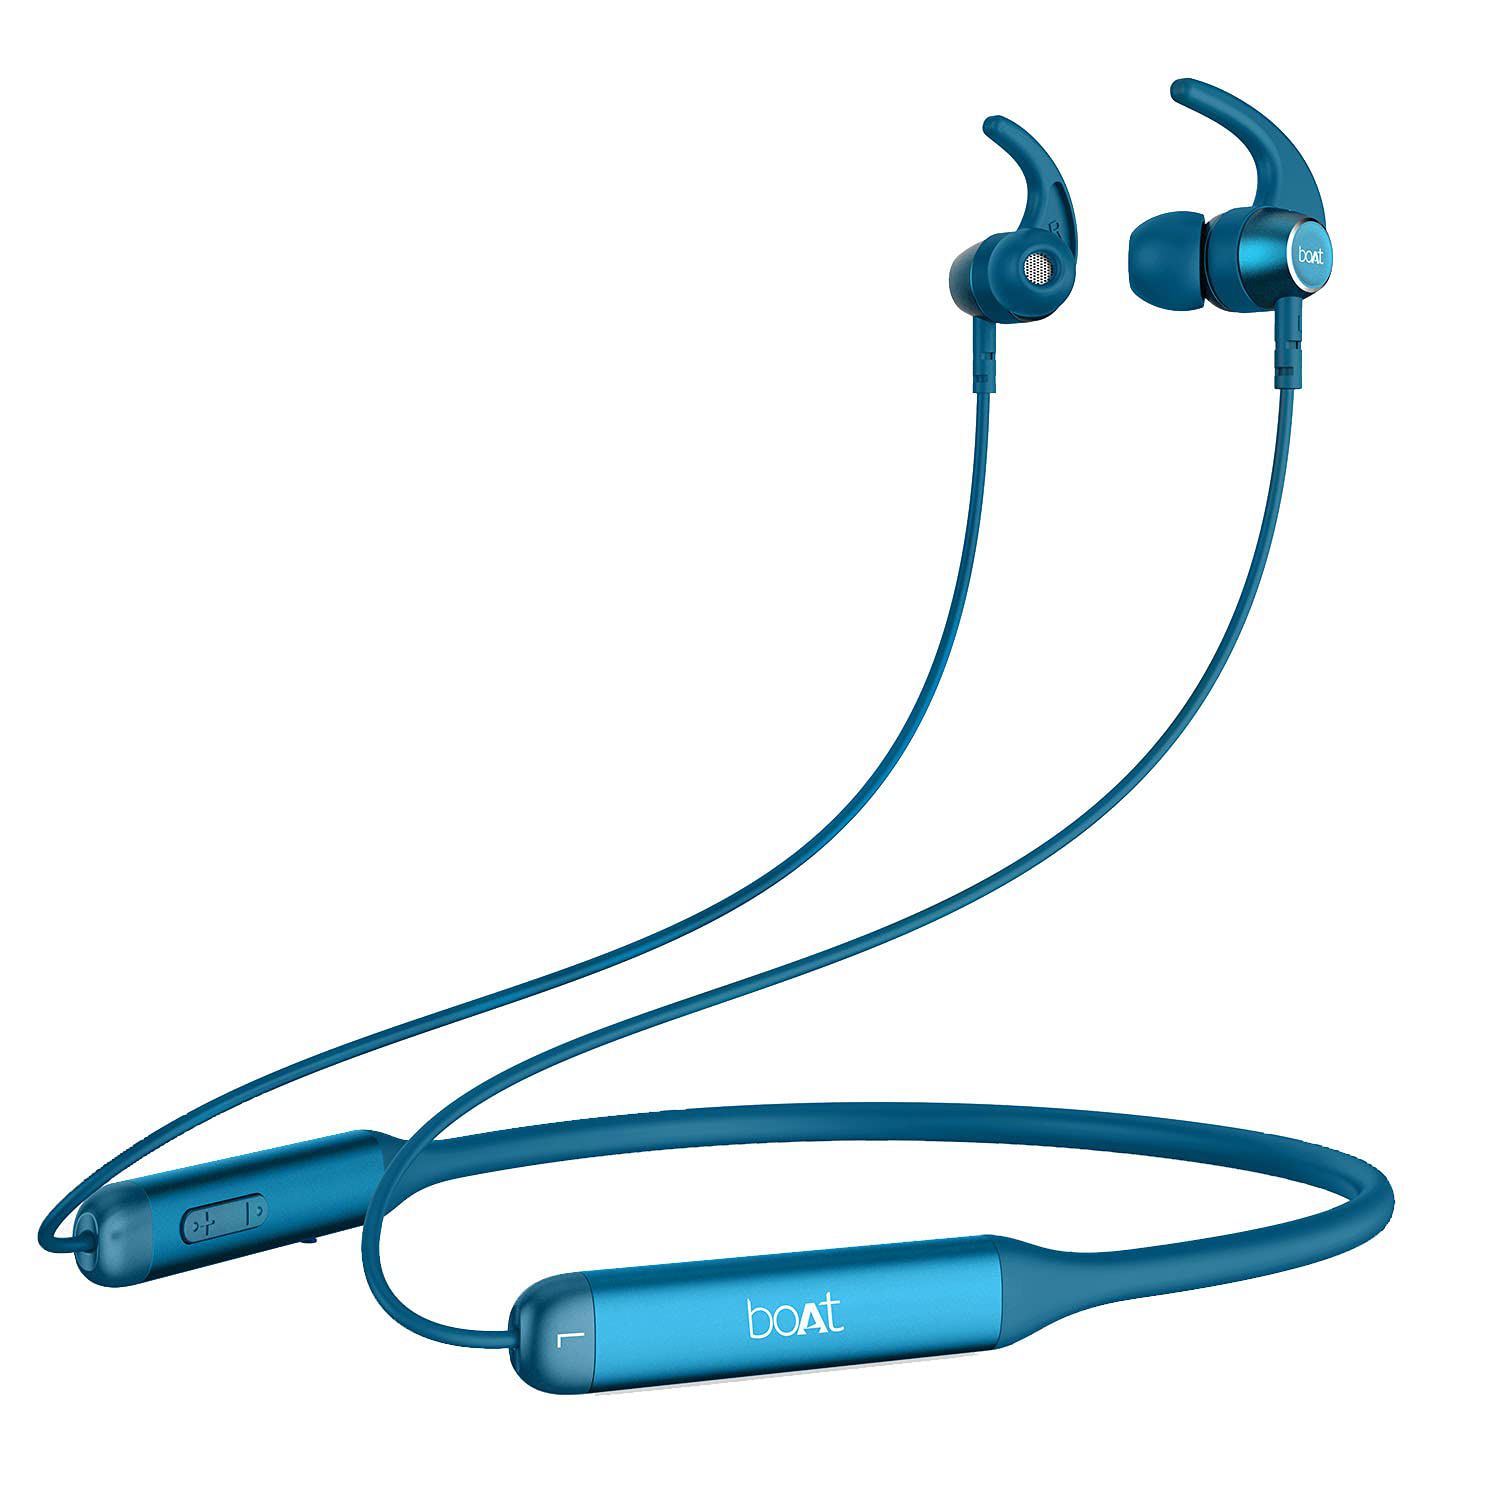     			boAt Rockerz 335 Bluetooth Neckband Wireless With Mic Headphones/Earphones (Ocean Blue)